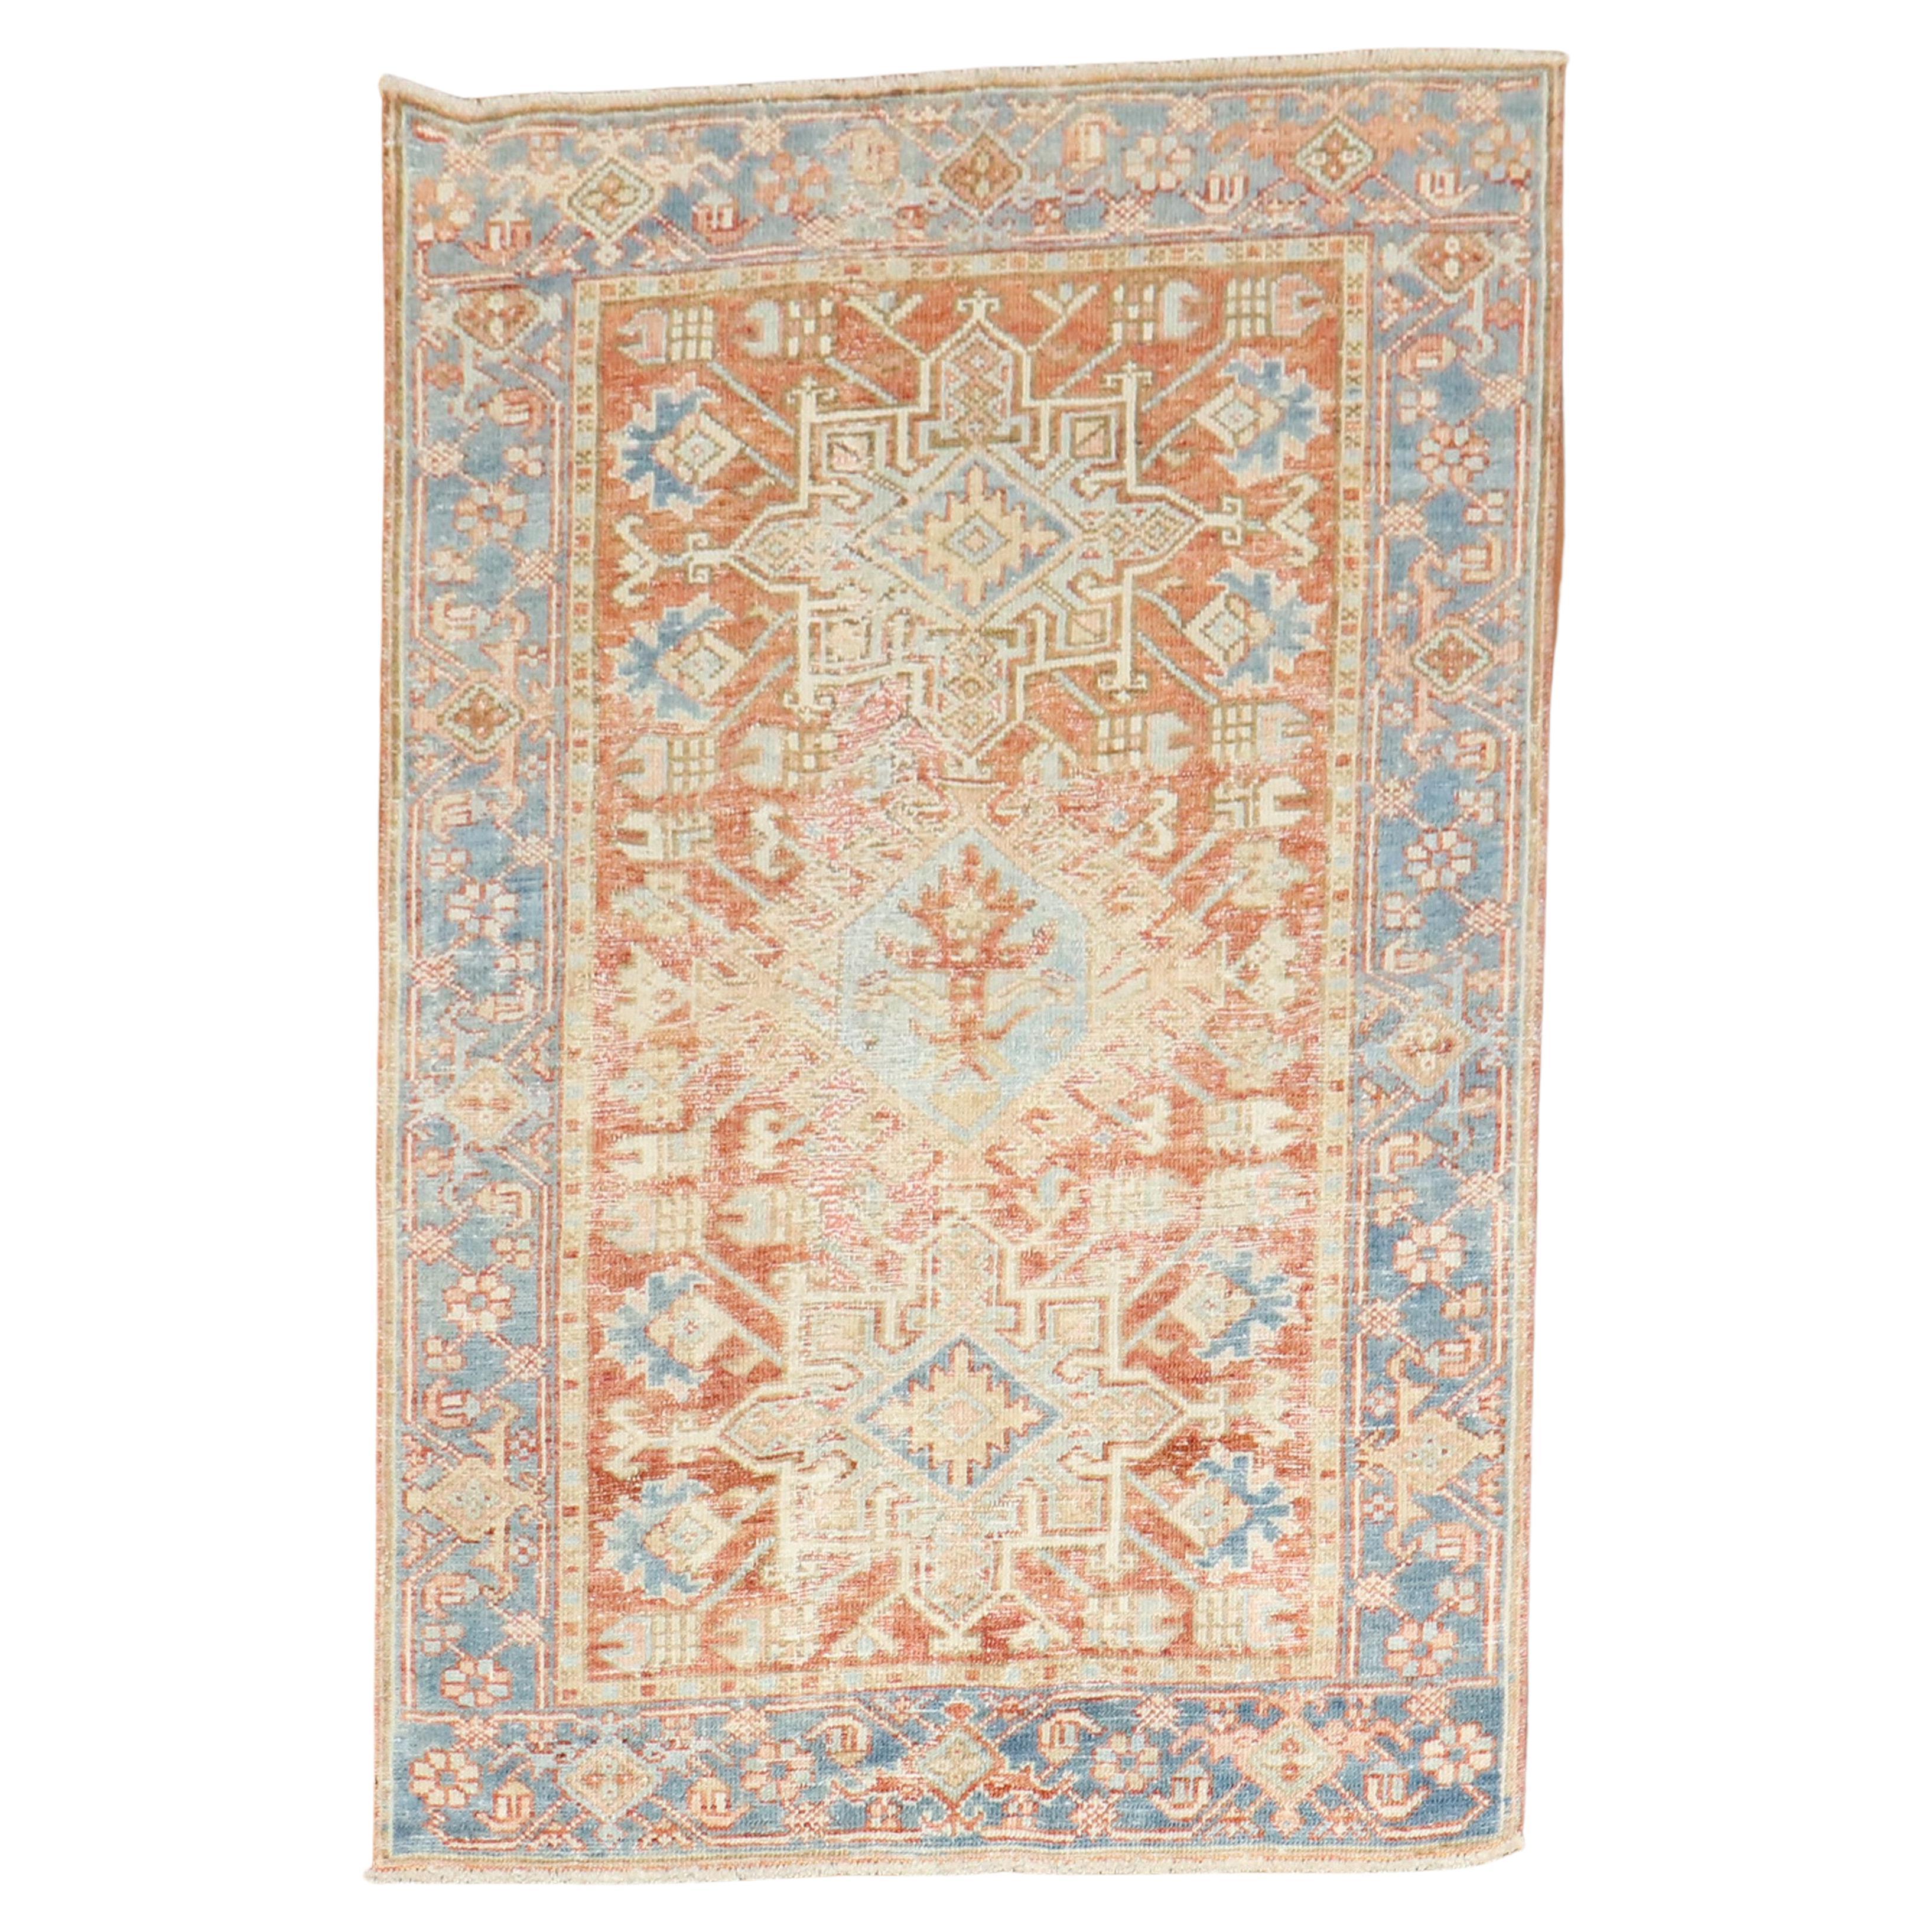 How can I spot a real Sarouk rug?